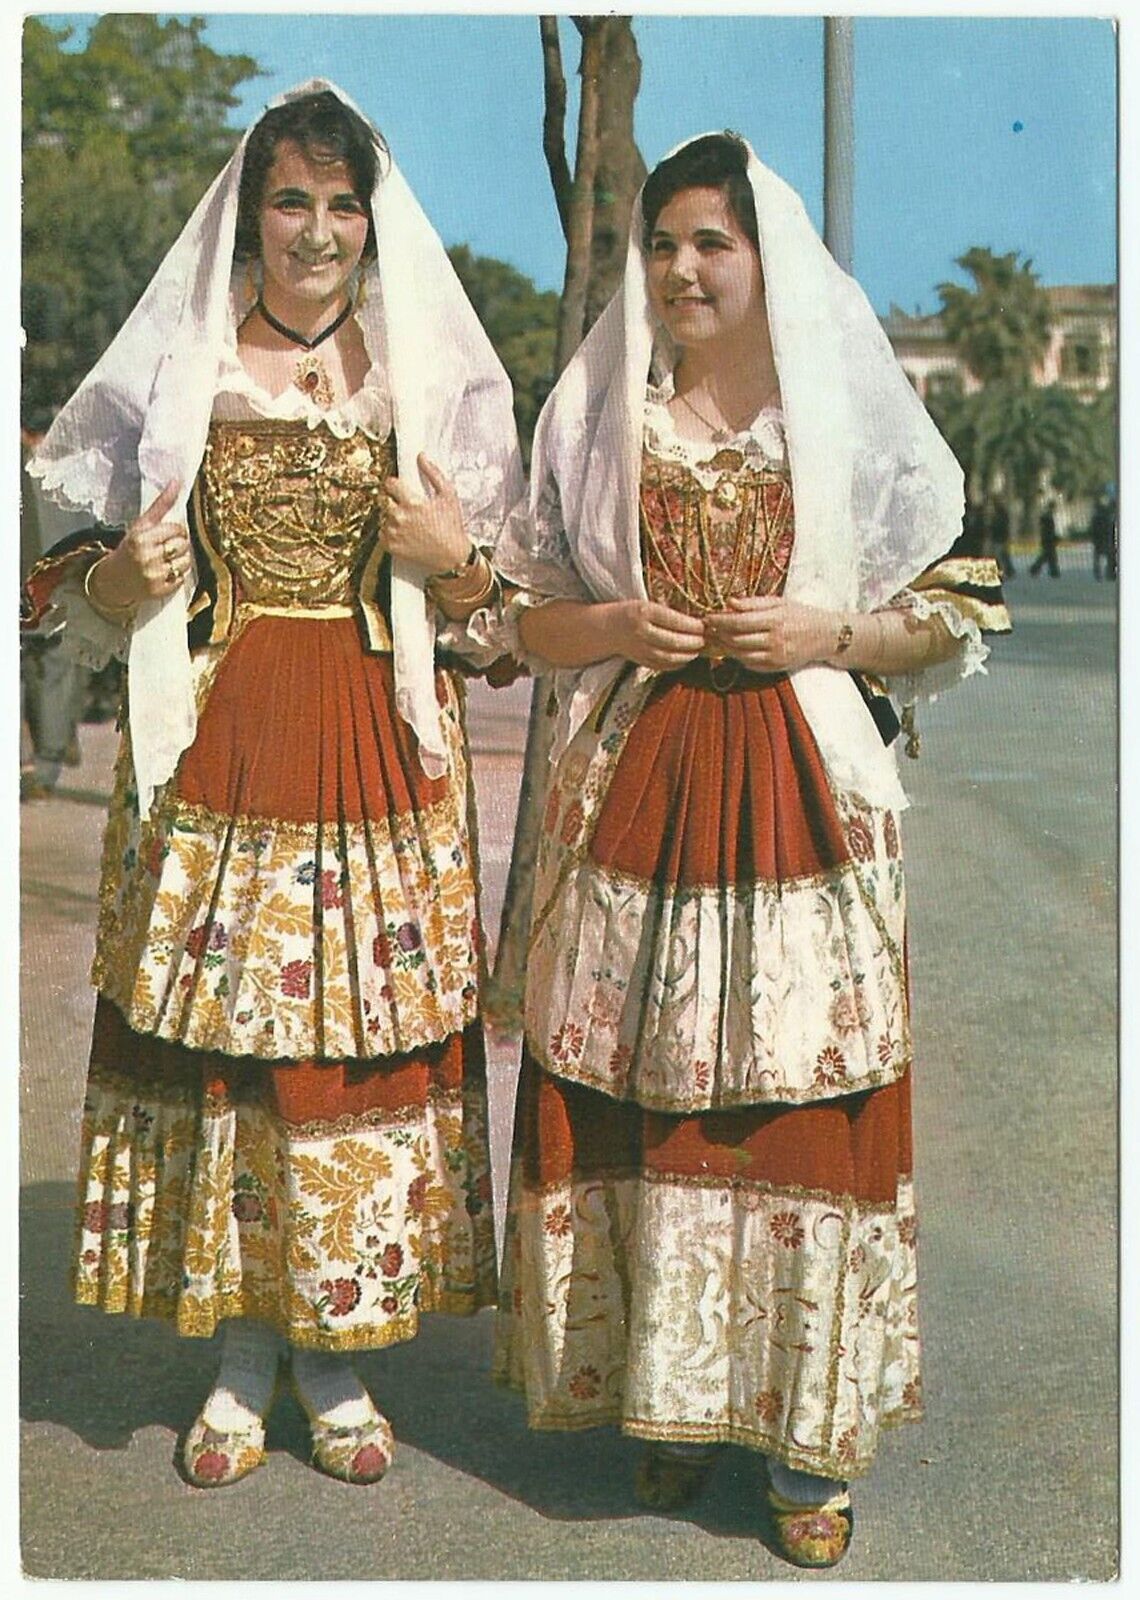 Sardinian Cavalcade, Vintage Postcard, Italy-Sardinian Costumes of Quartu S. Ela